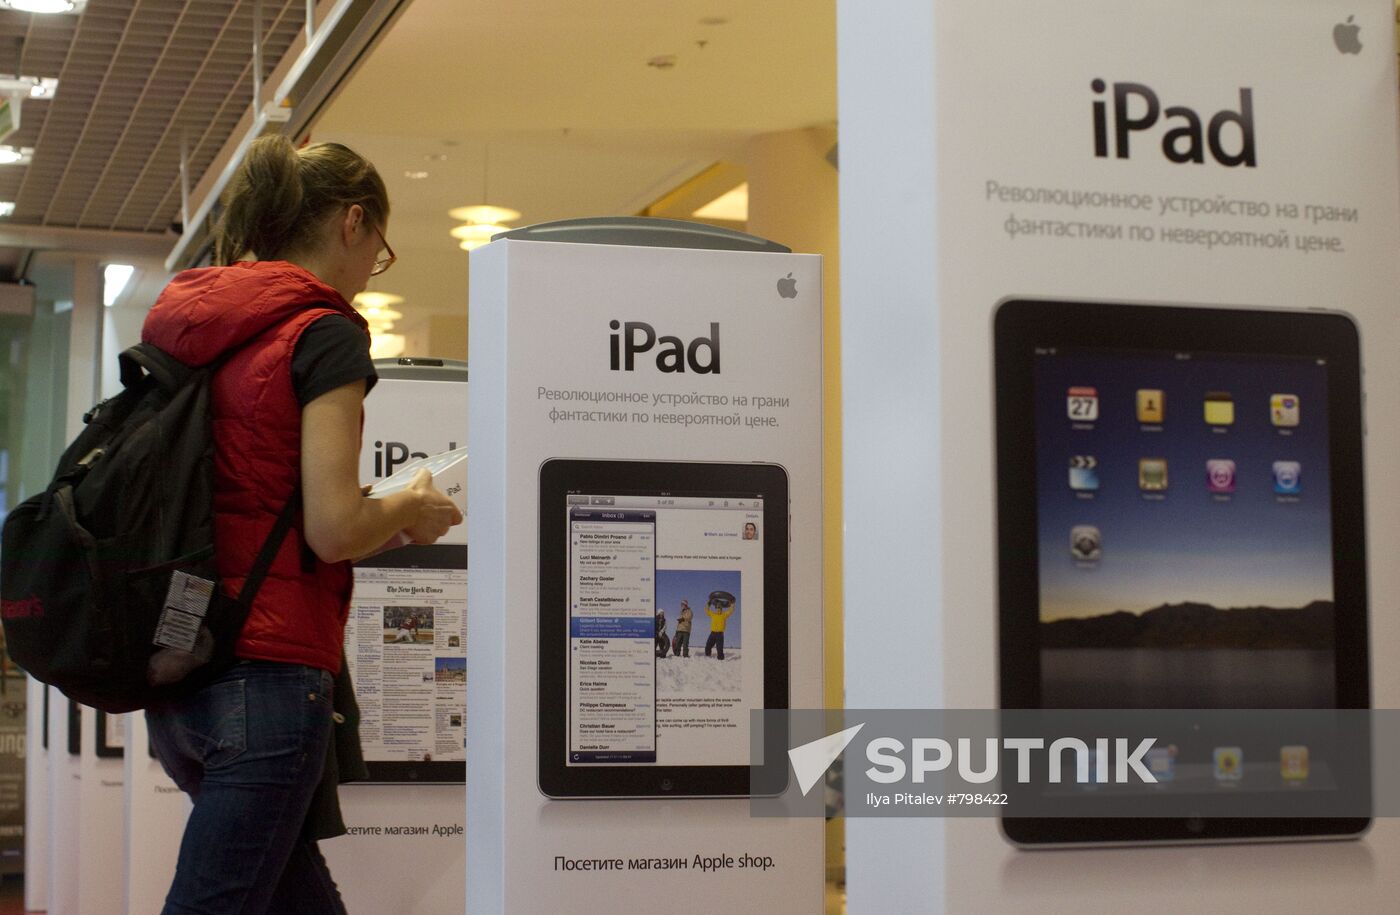 Apple iPad sold in Russia